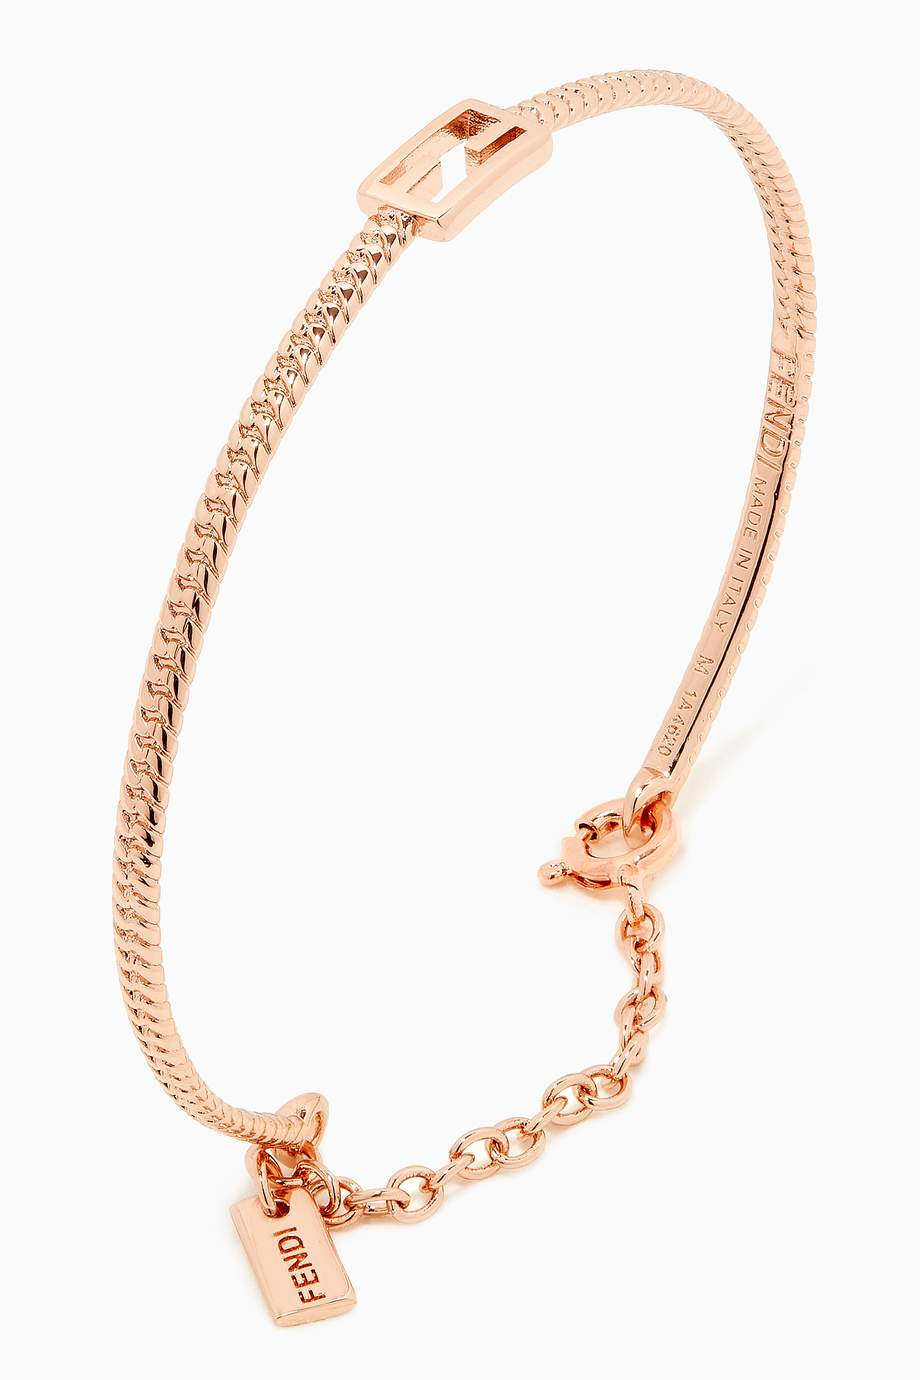 Shop Fendi Rose Gold FF Baguette Bracelet in Metal for Women | Ounass UAE